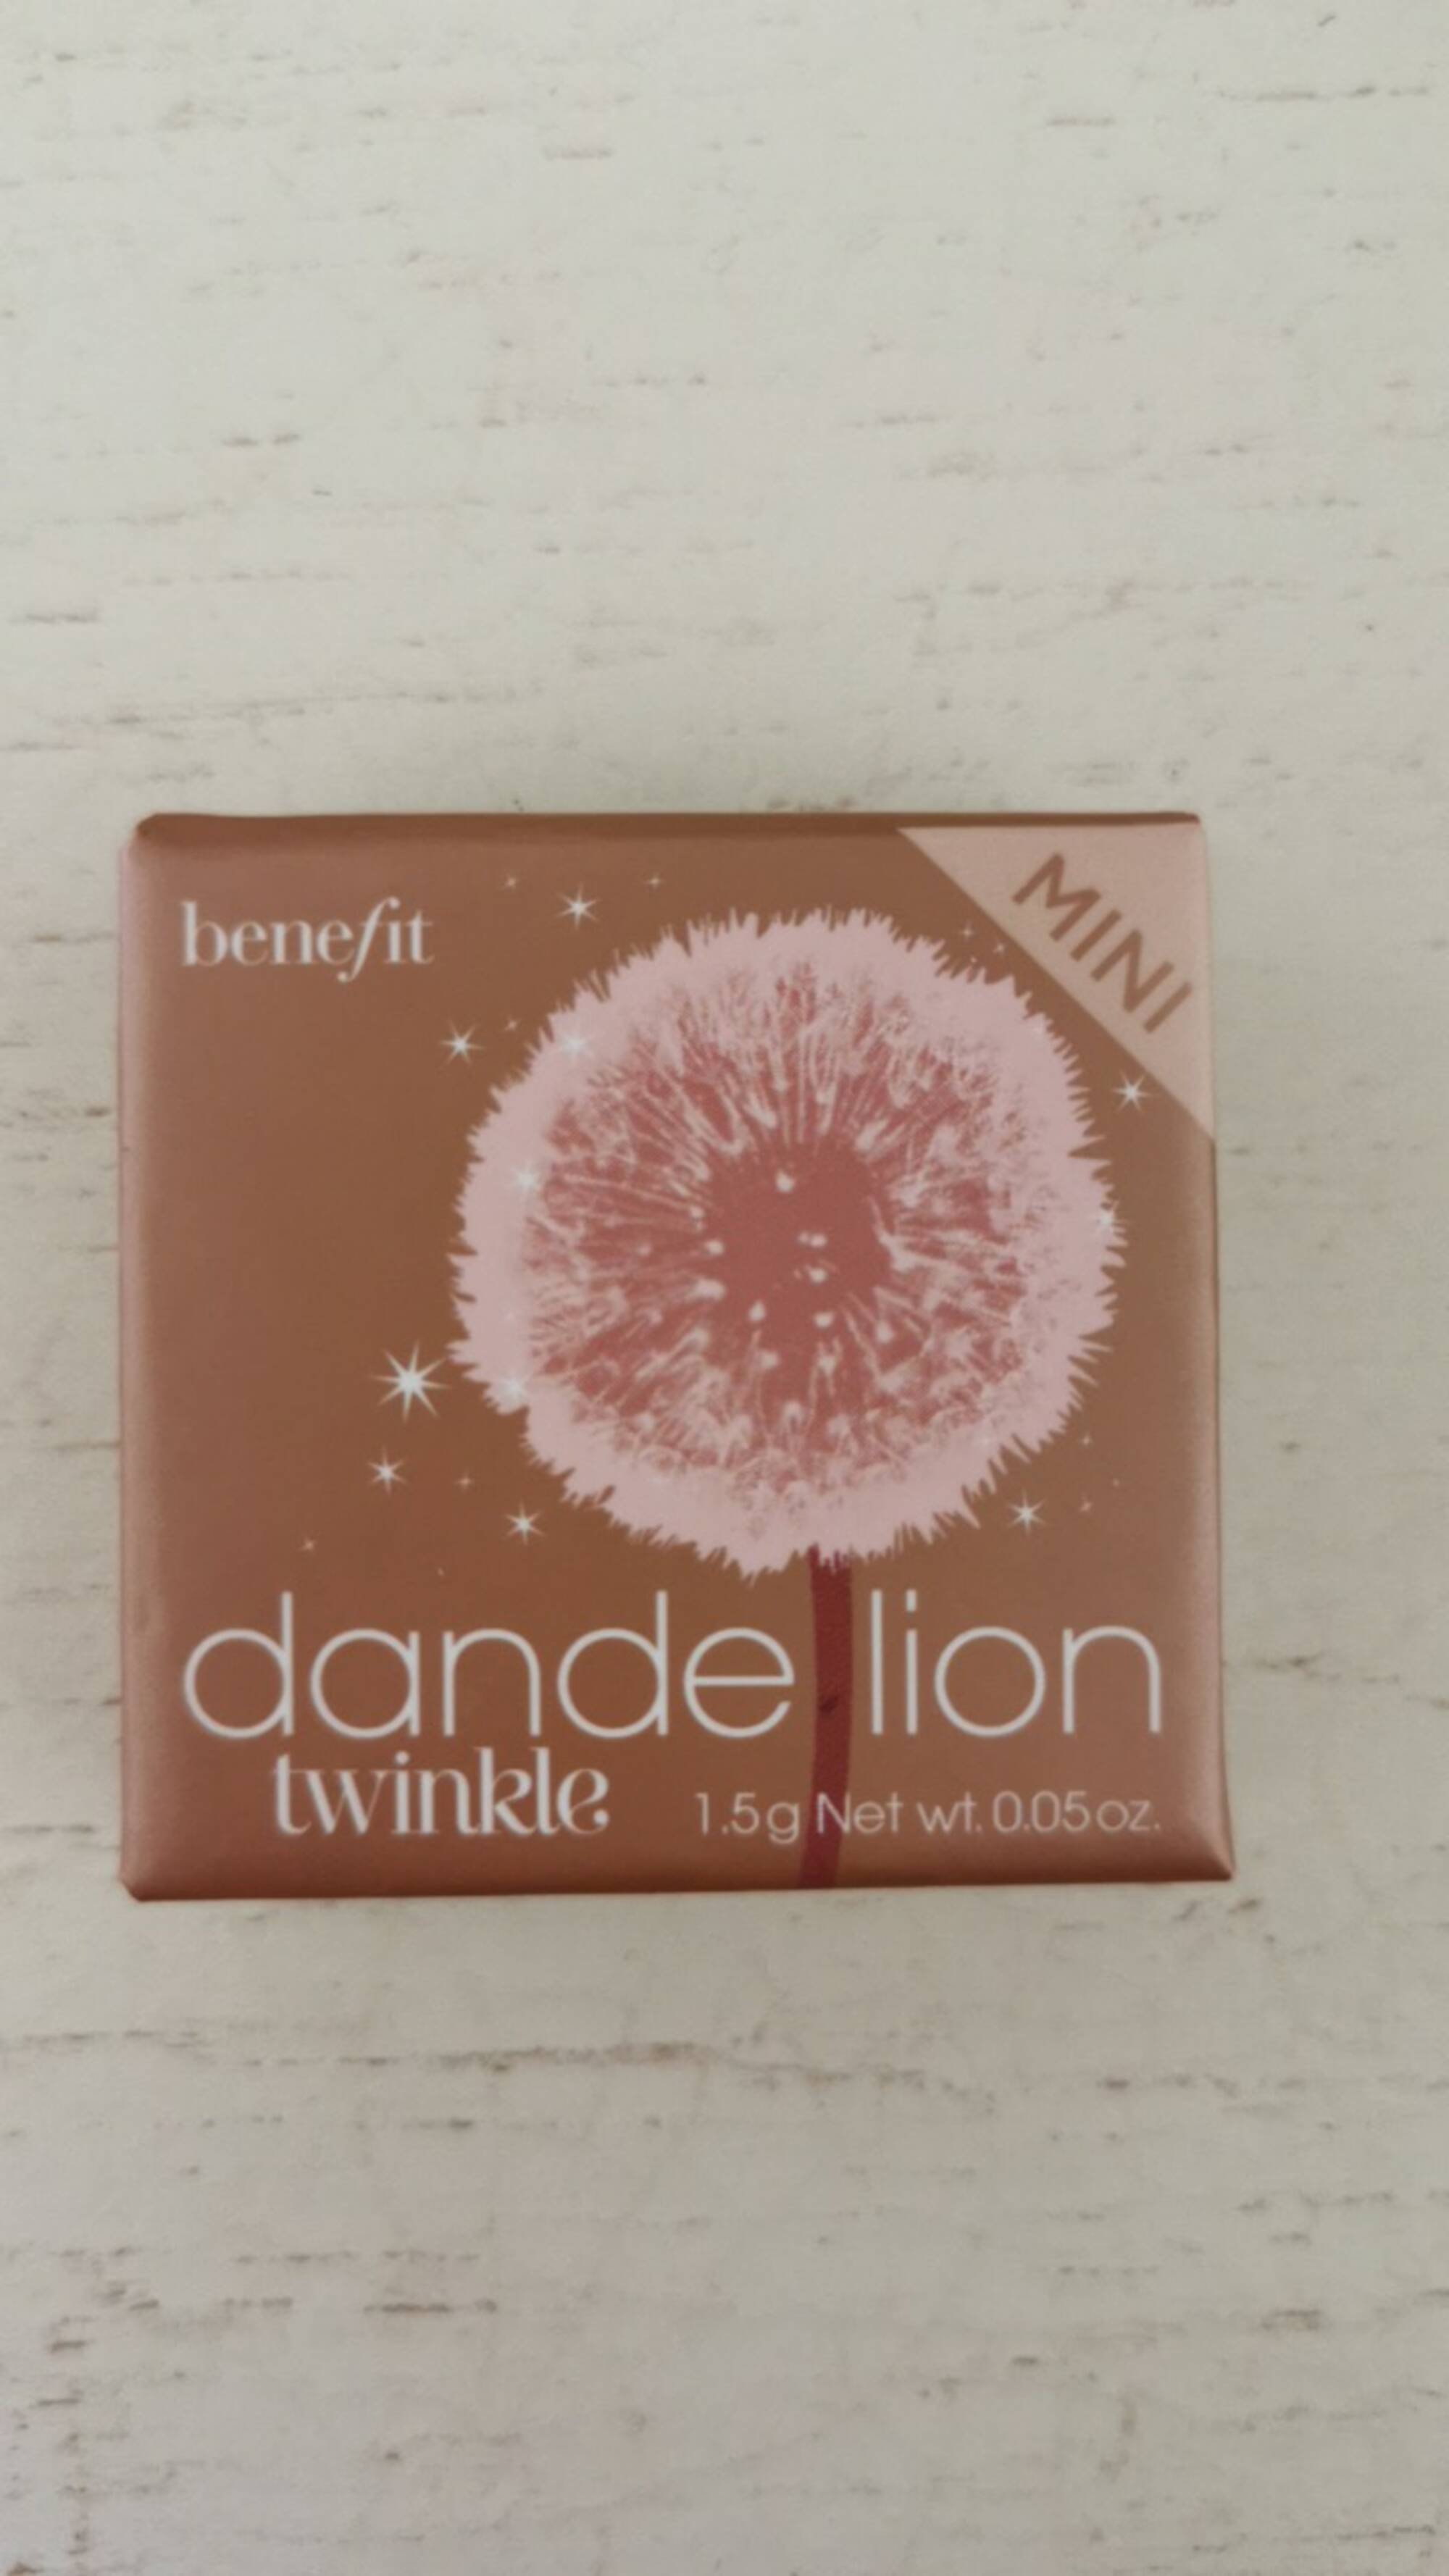 BENEFIT - Dandelion twinkle mini - Soft nude-pink highlighter